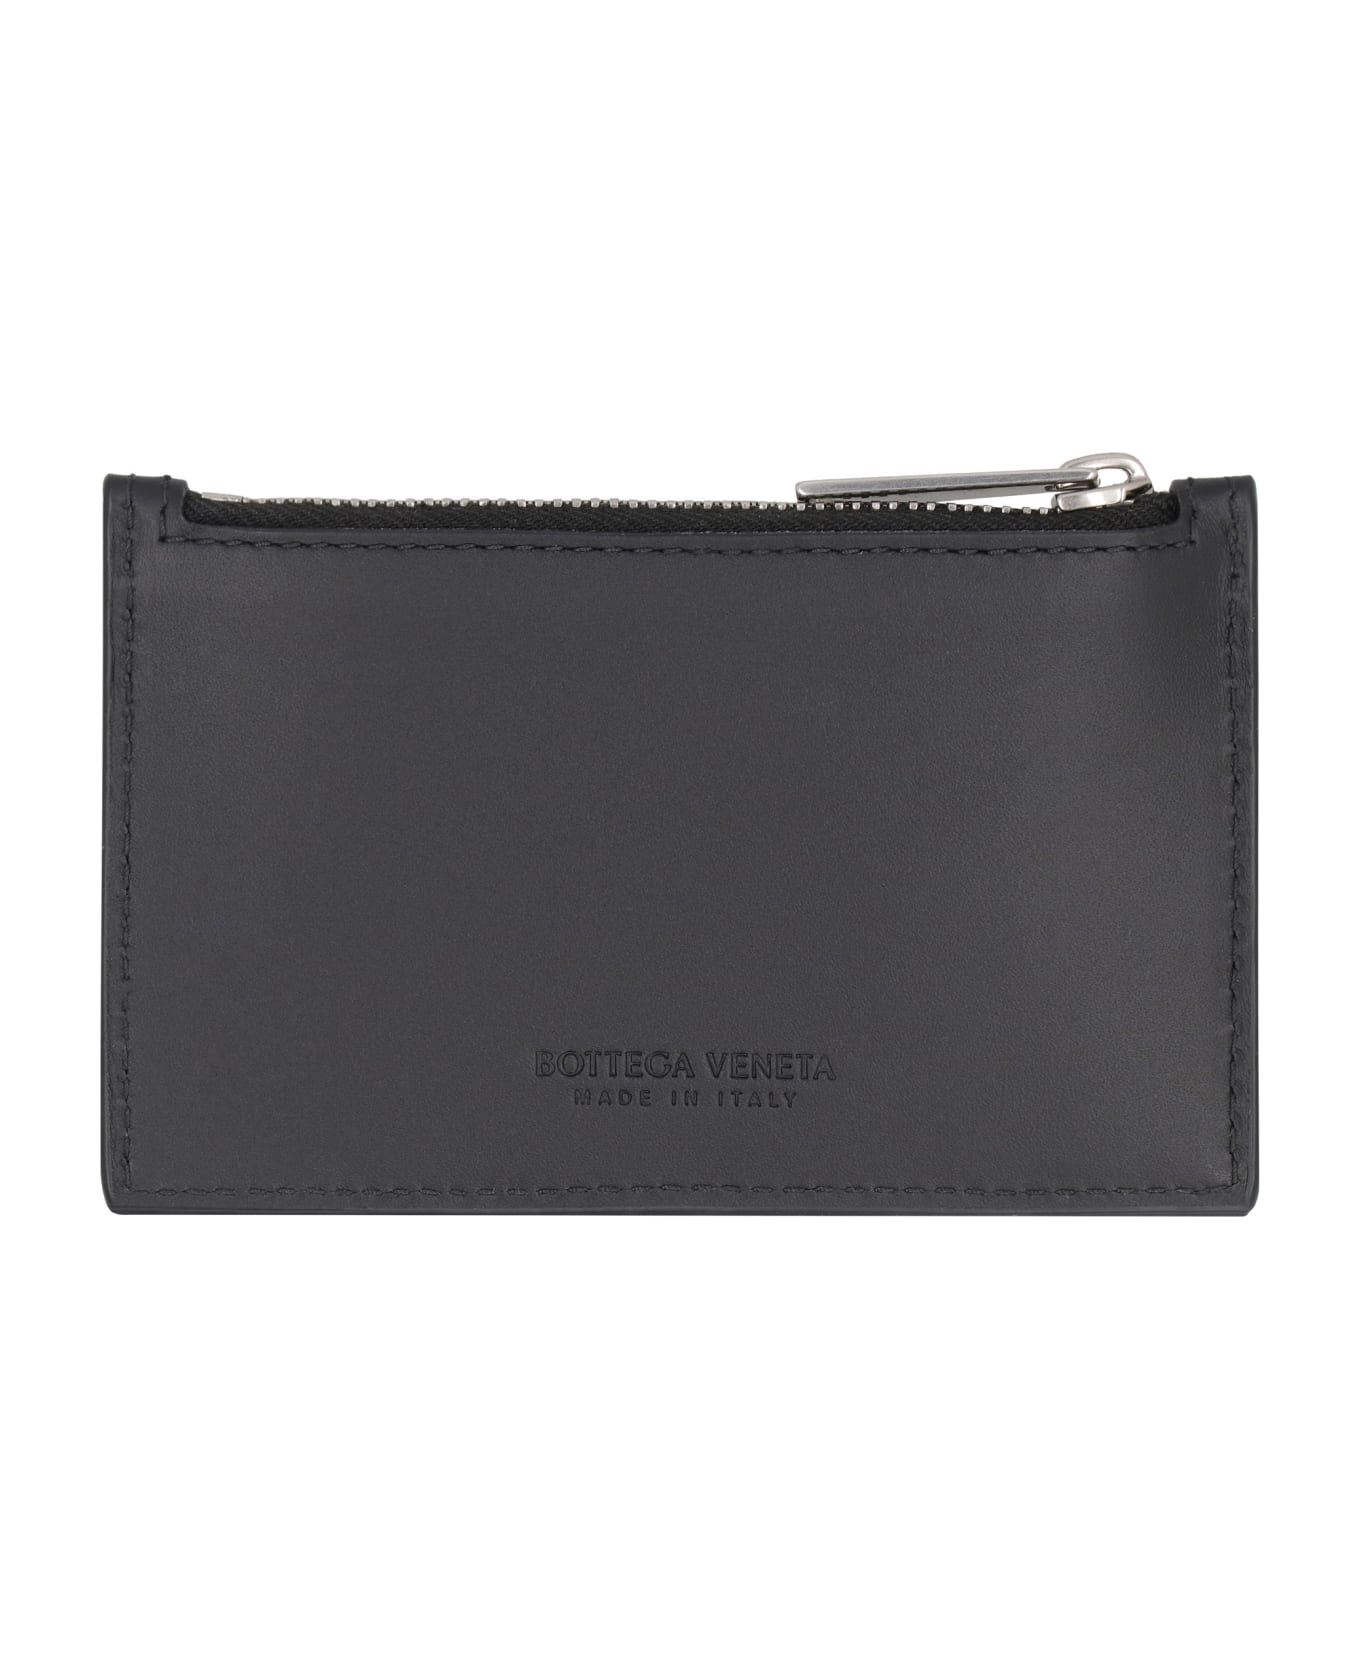 Bottega Veneta Leather Card Holder - black